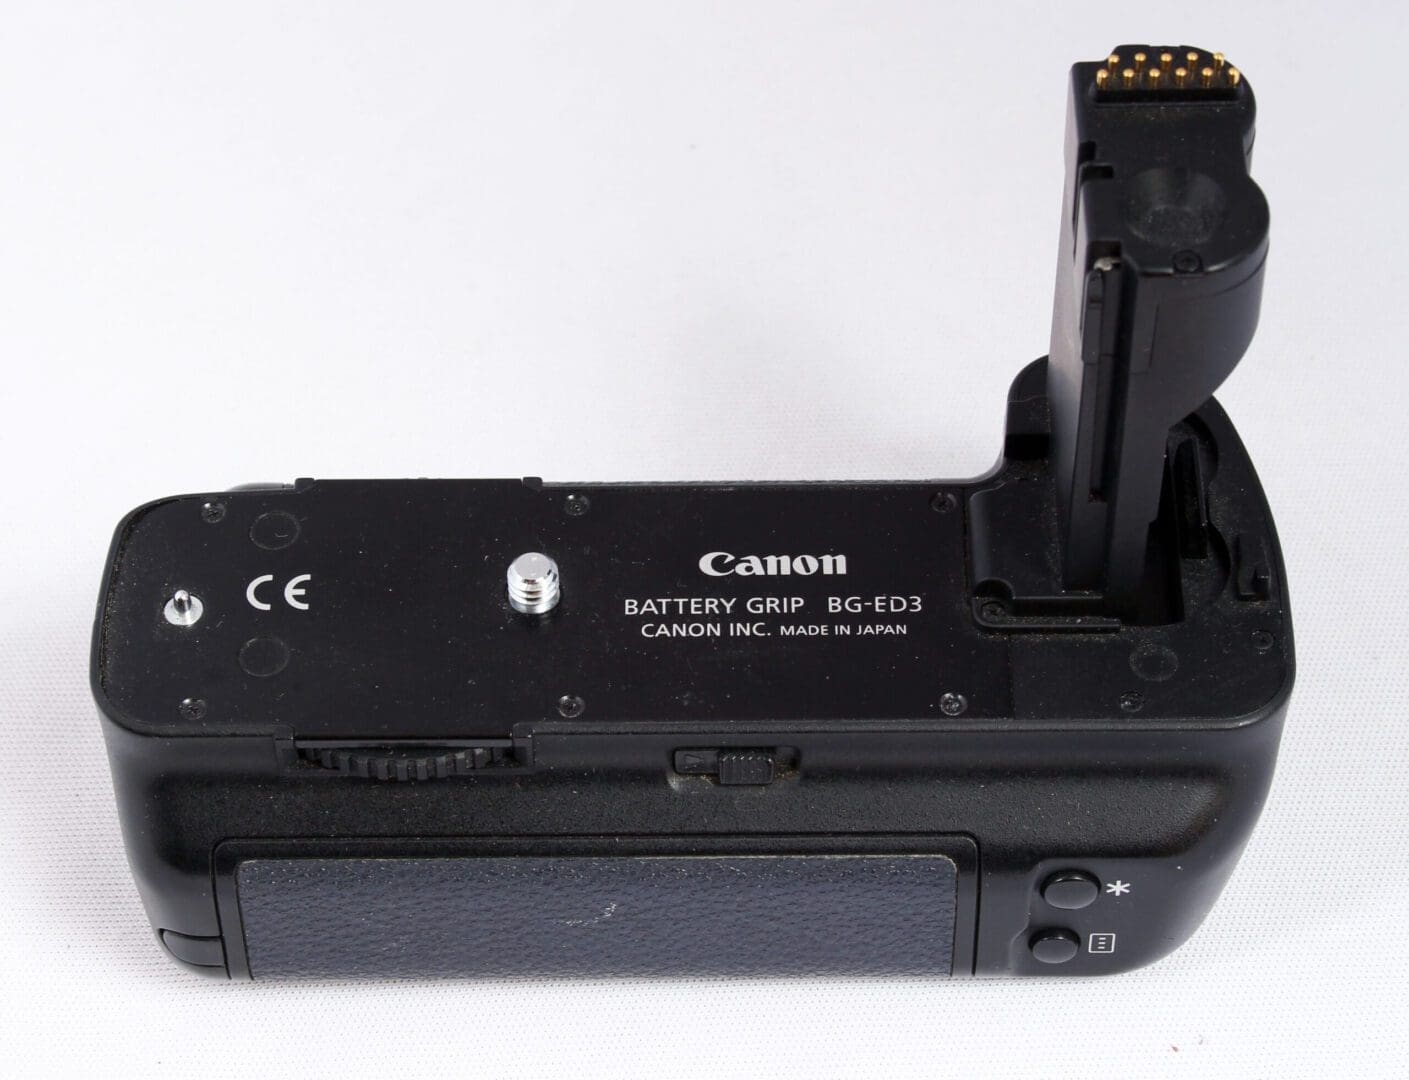 Canon BG-ED3 battery grip